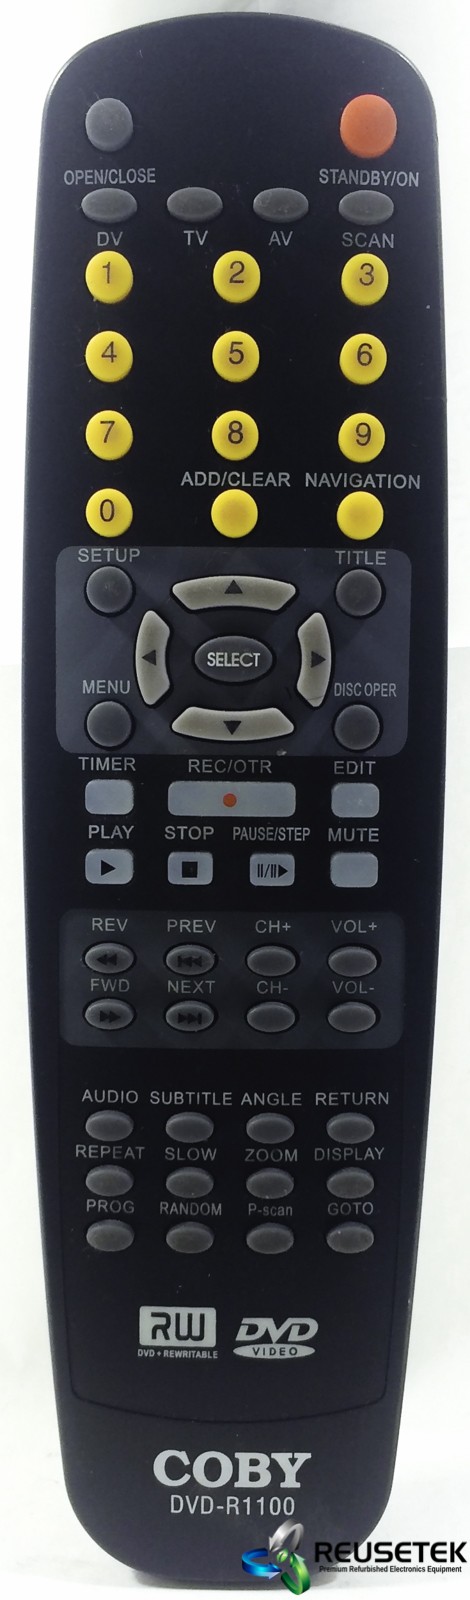 100411-B61-Coby DVD-R1100 DVD Remote Control-image